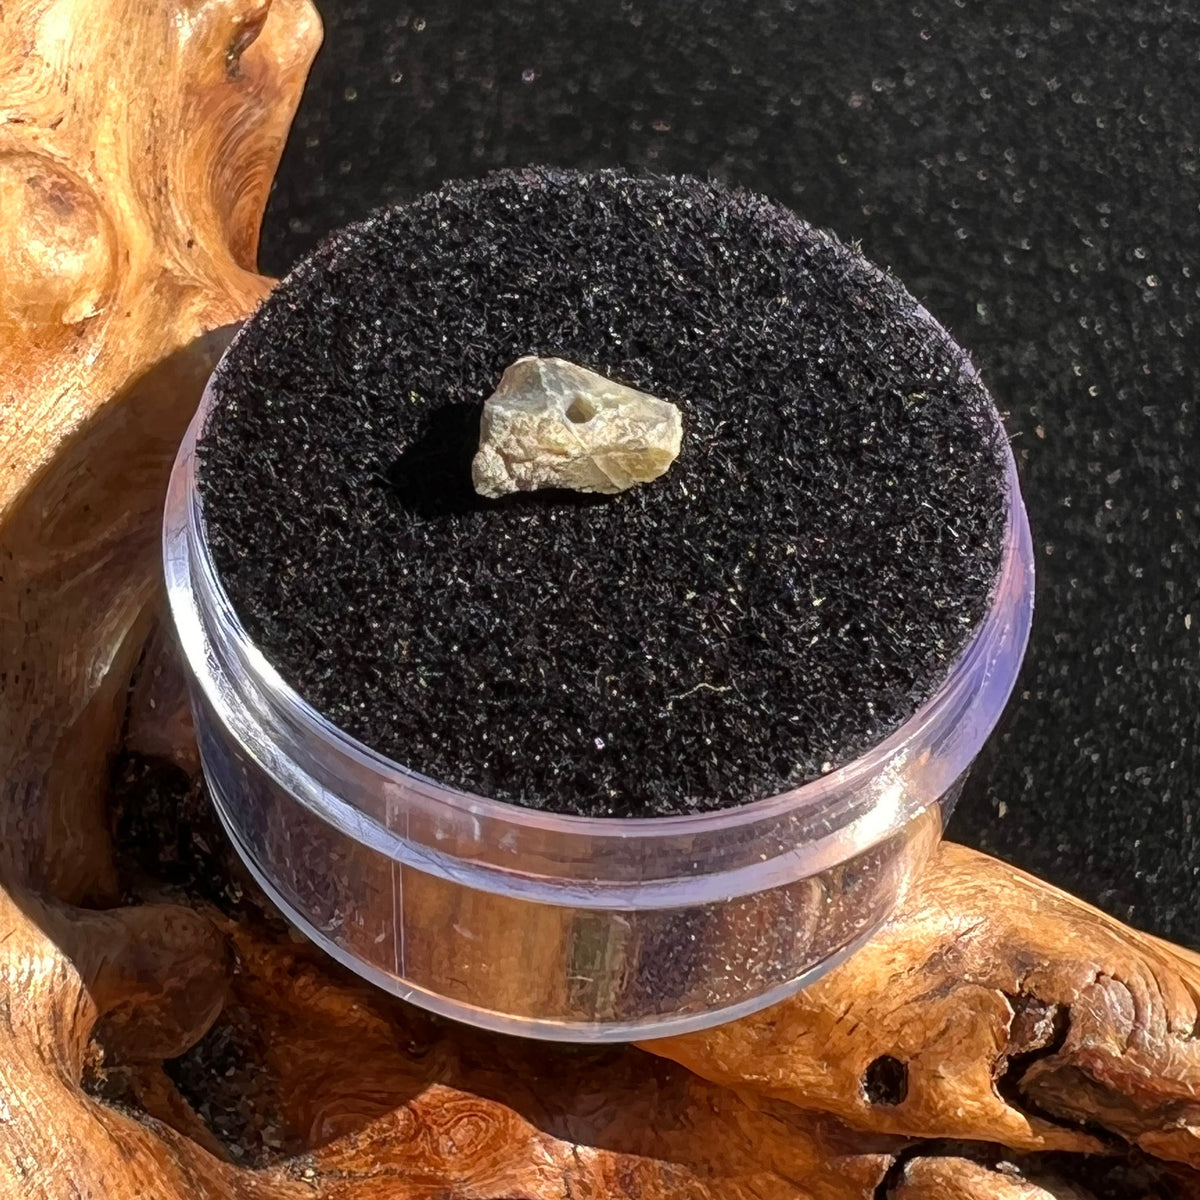 Tatahouine Meteorite Bead Natural #5-Moldavite Life